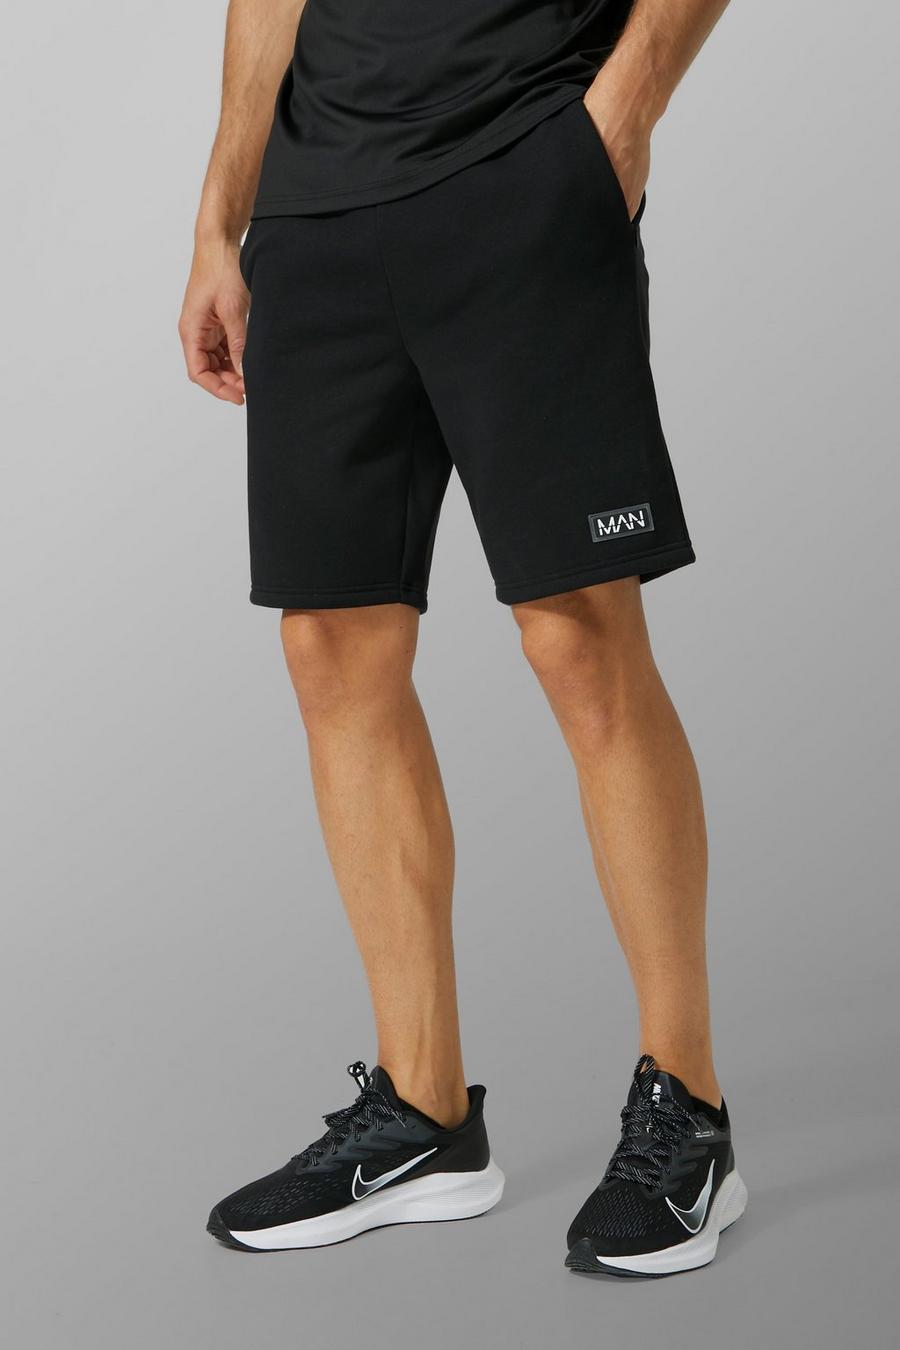 Tall Man Active Trainings-Shorts, Black schwarz